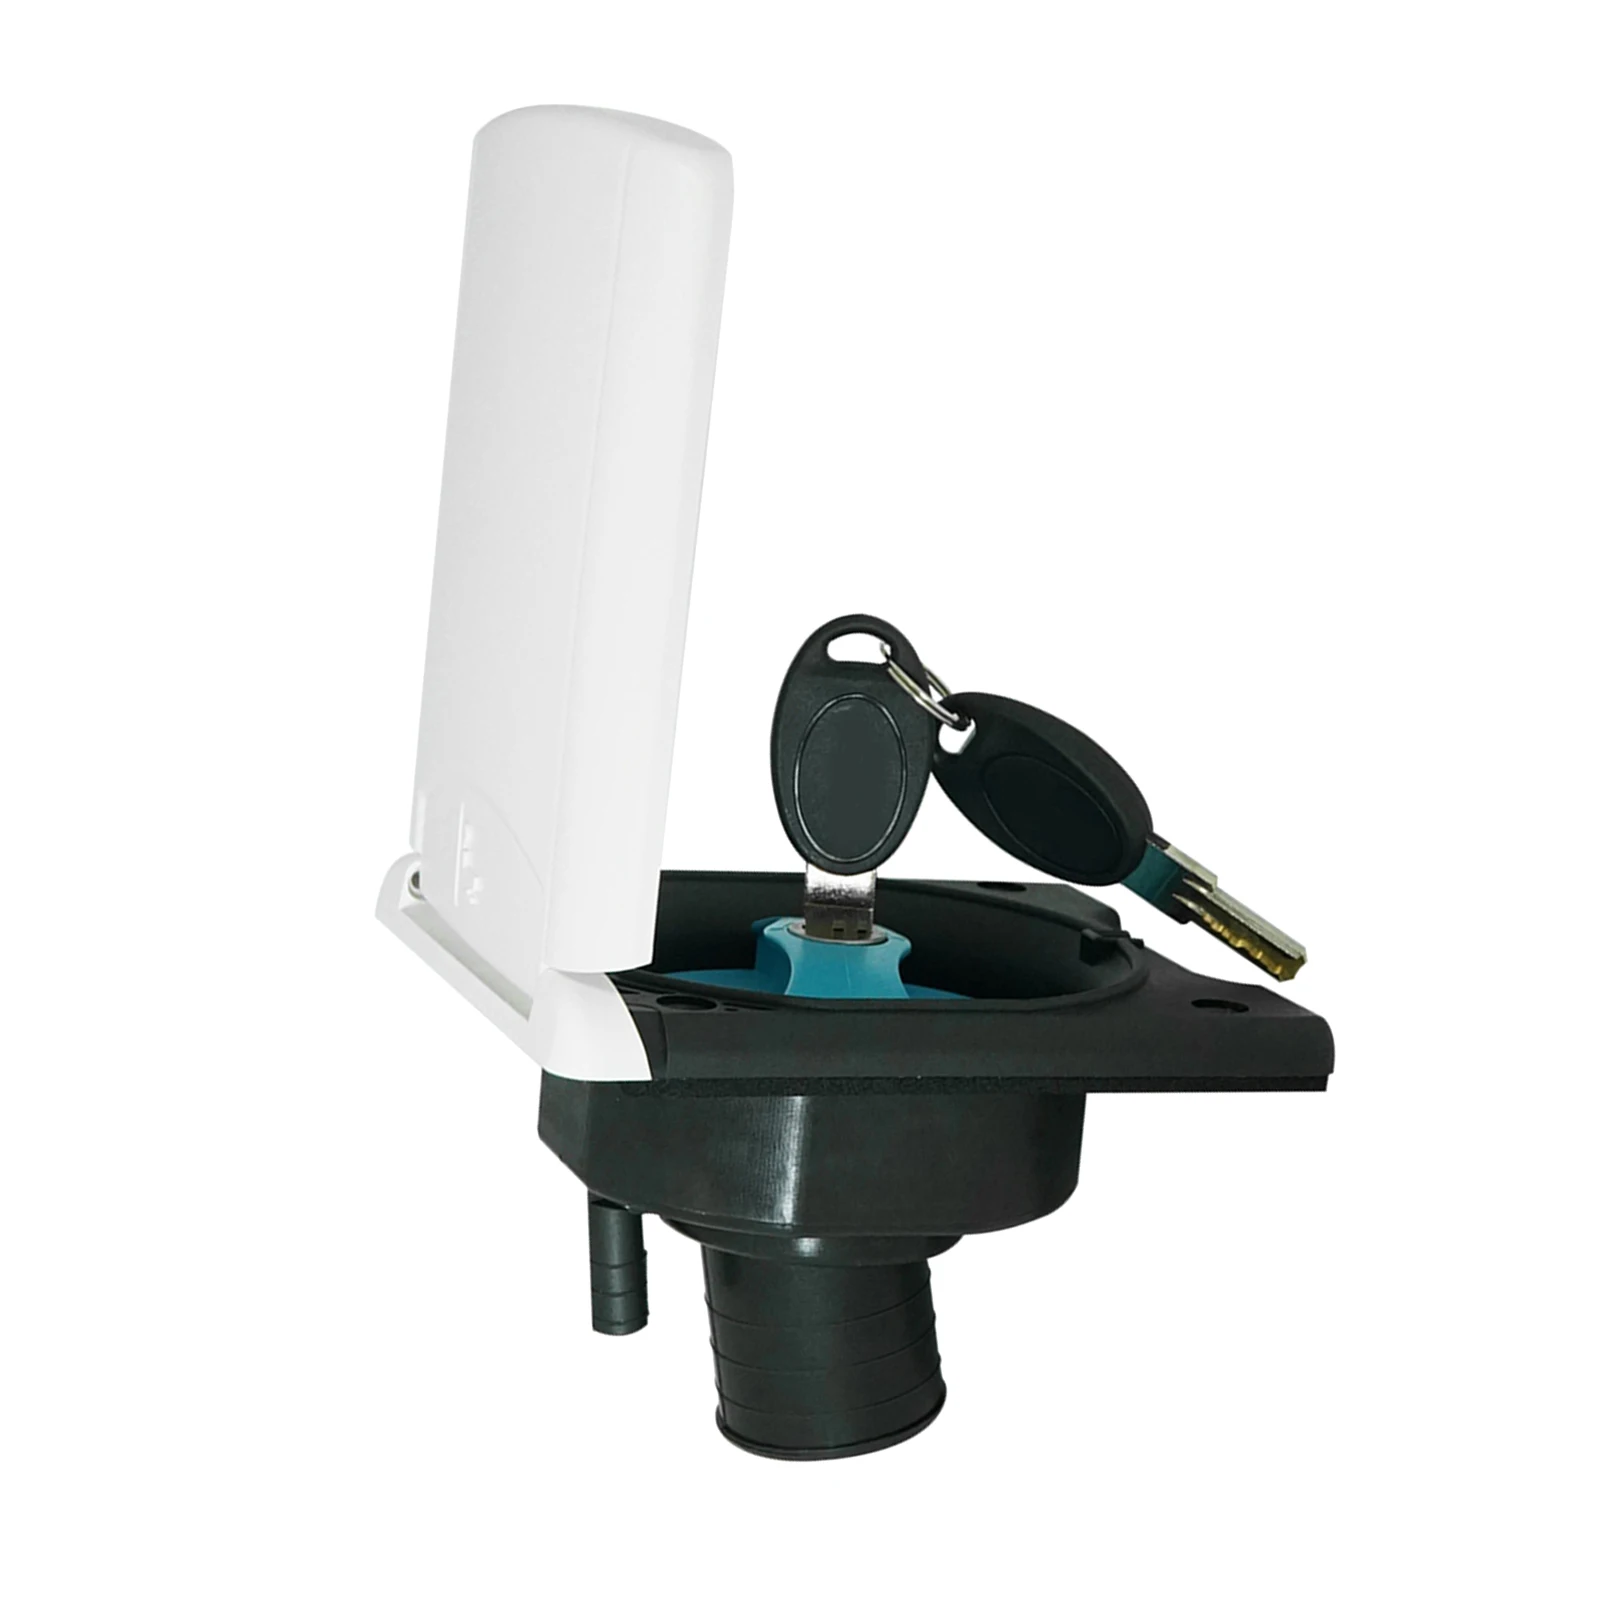 Trailer RV Camper Gravity Water Inlet Hatch Lock with Keys Durable Premium